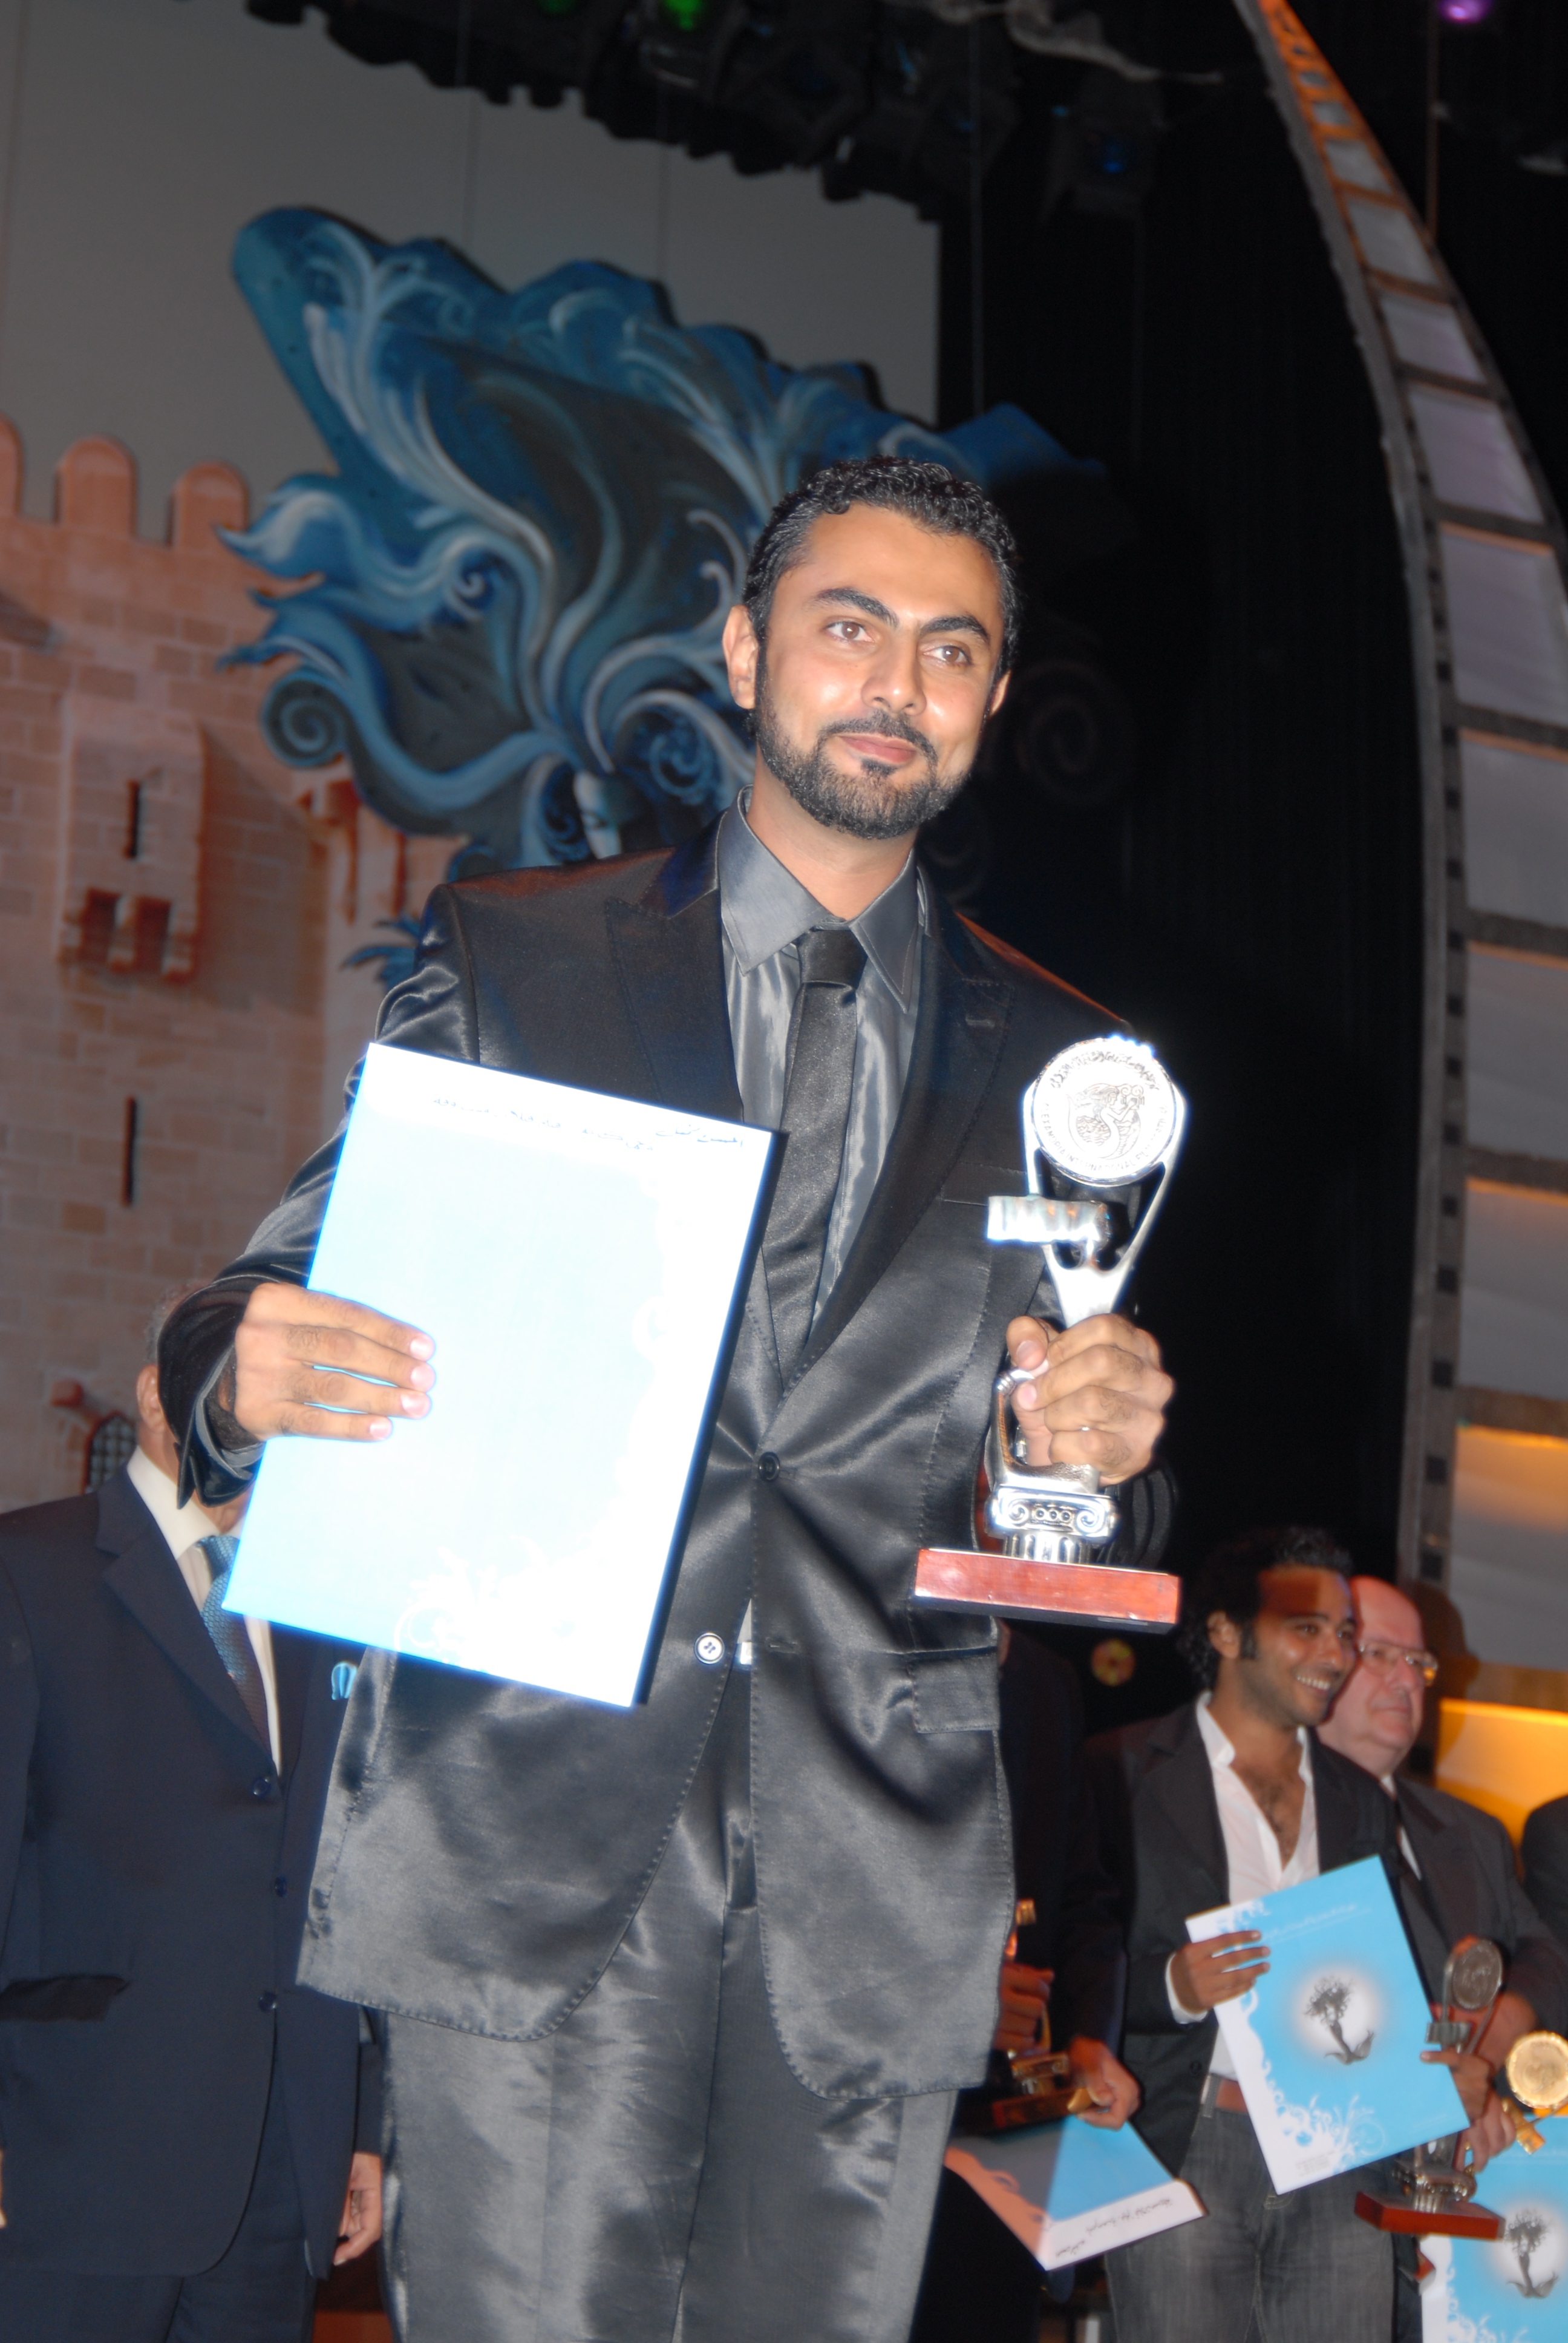 Mohamed Karim, 2008 Best Actor Award in Alexandria international Film Festival for his lead role in 